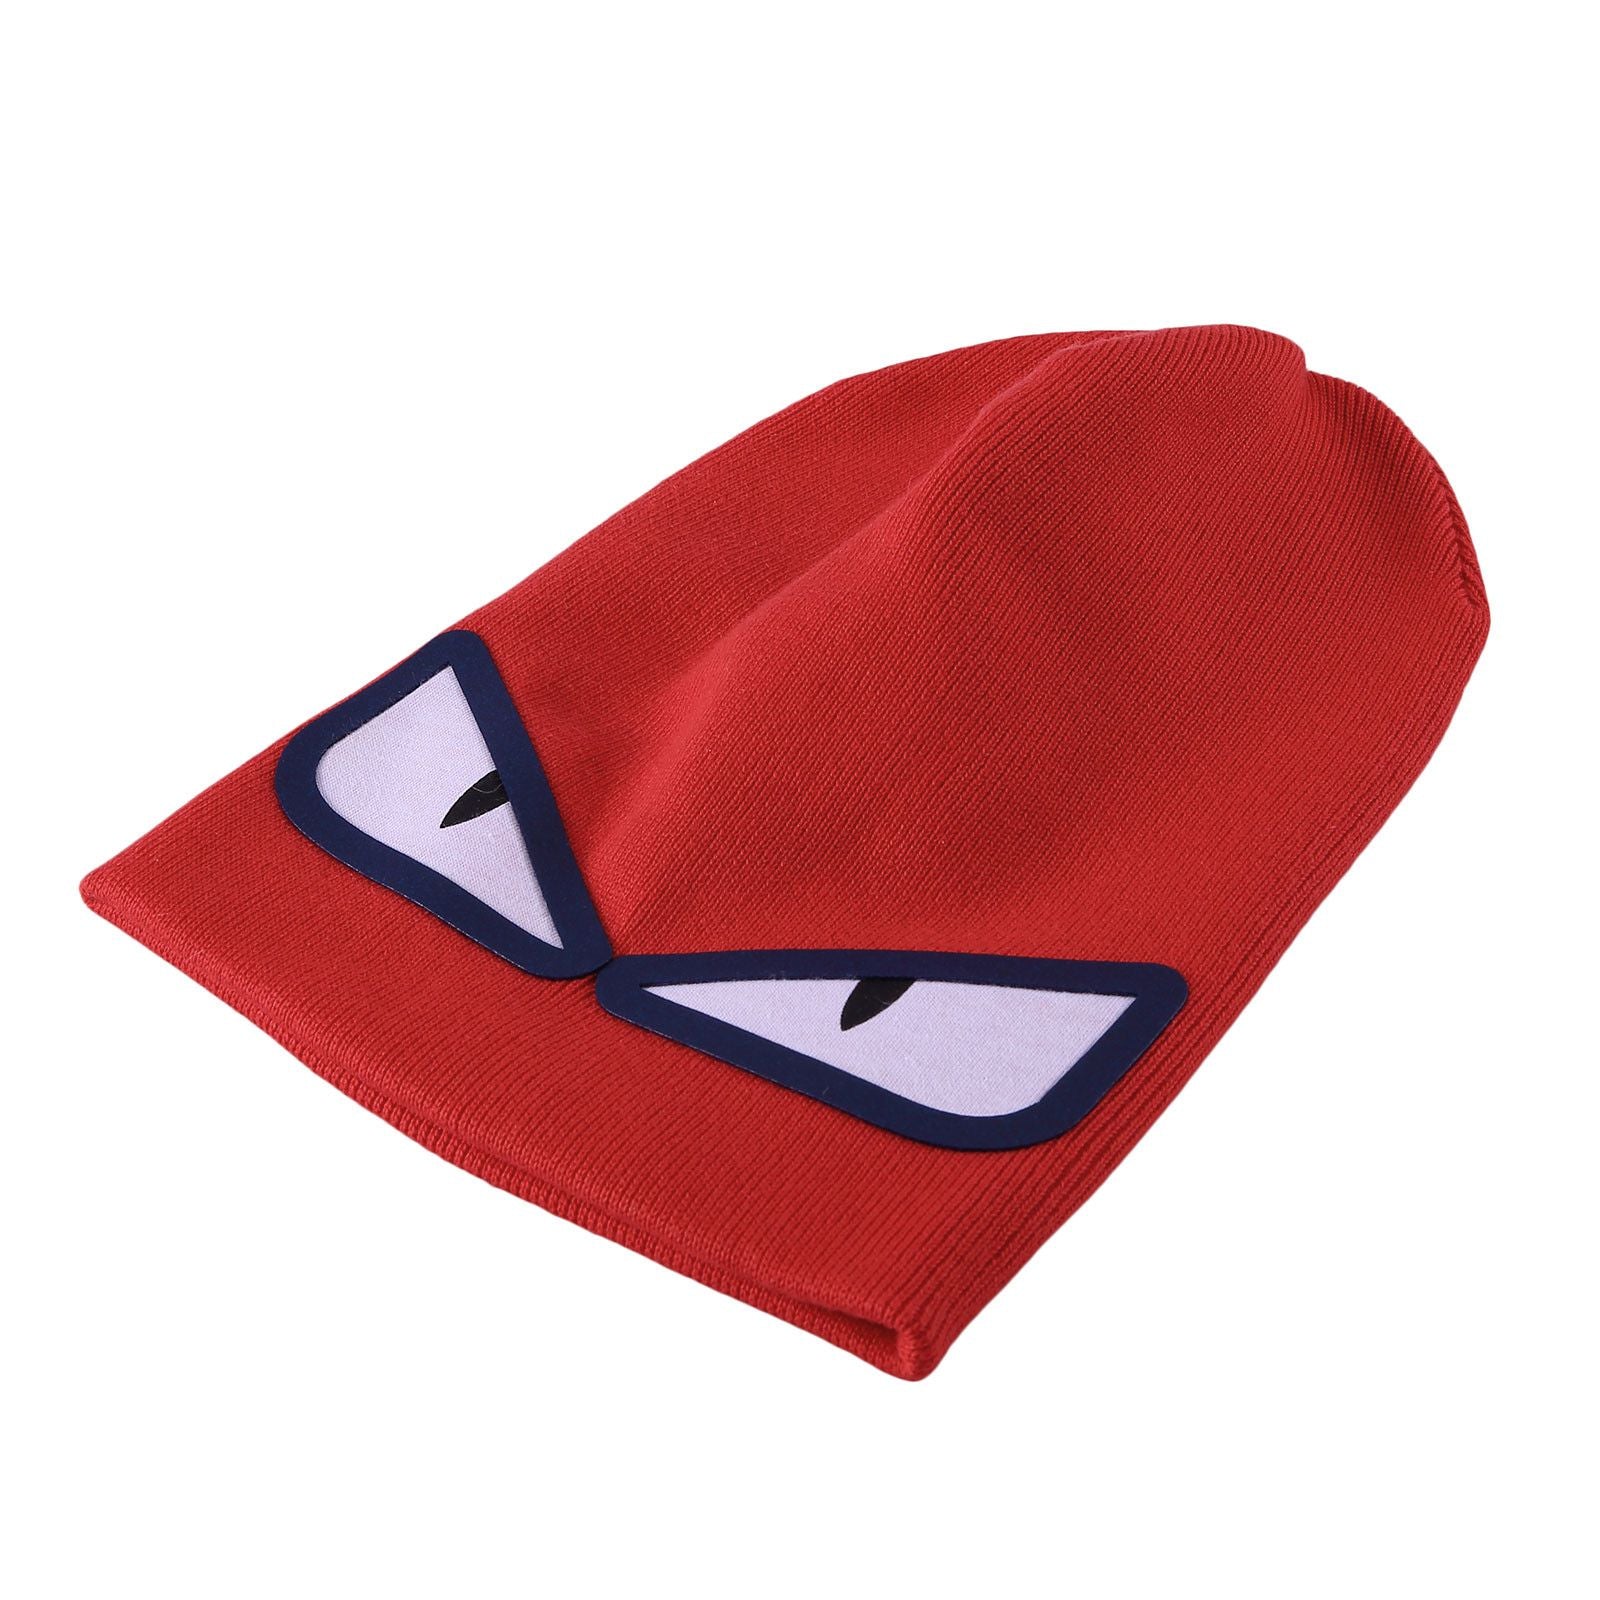 Boys Light Red Knitted 'Monster' Eyes Printed Hat - CÉMAROSE | Children's Fashion Store - 3